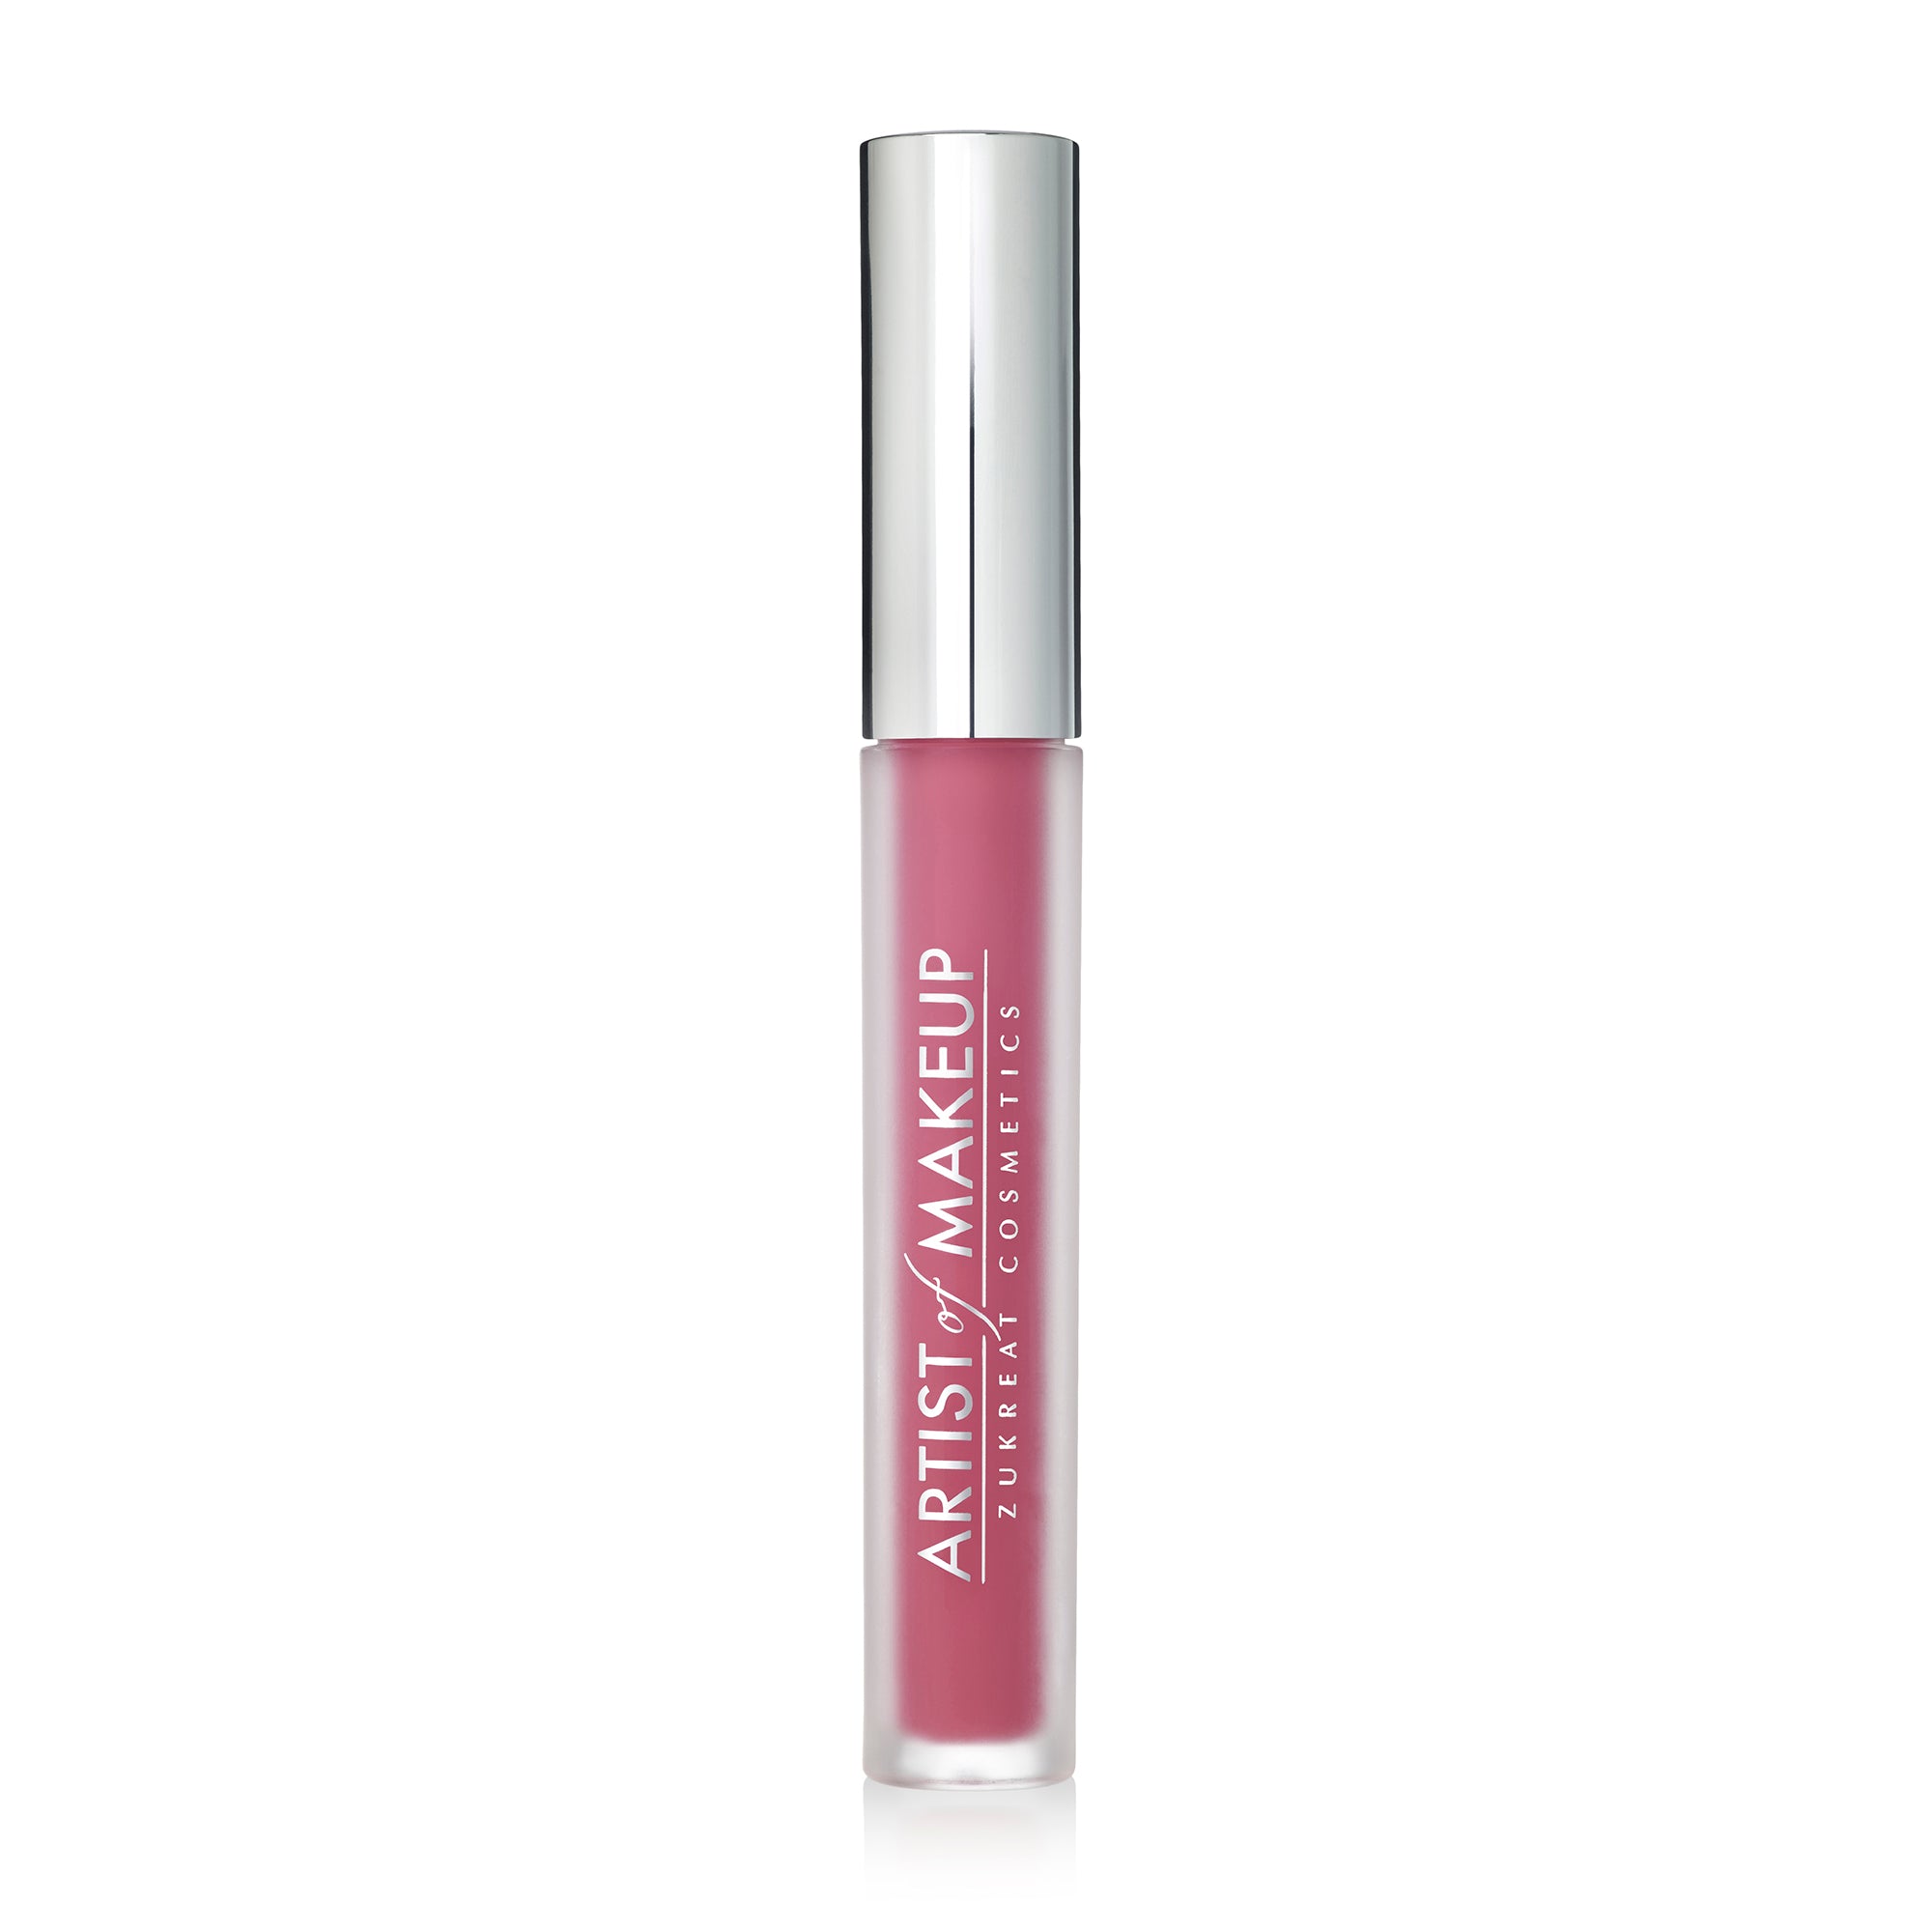 Fearless - Extreme Matte Liquid Lipstick